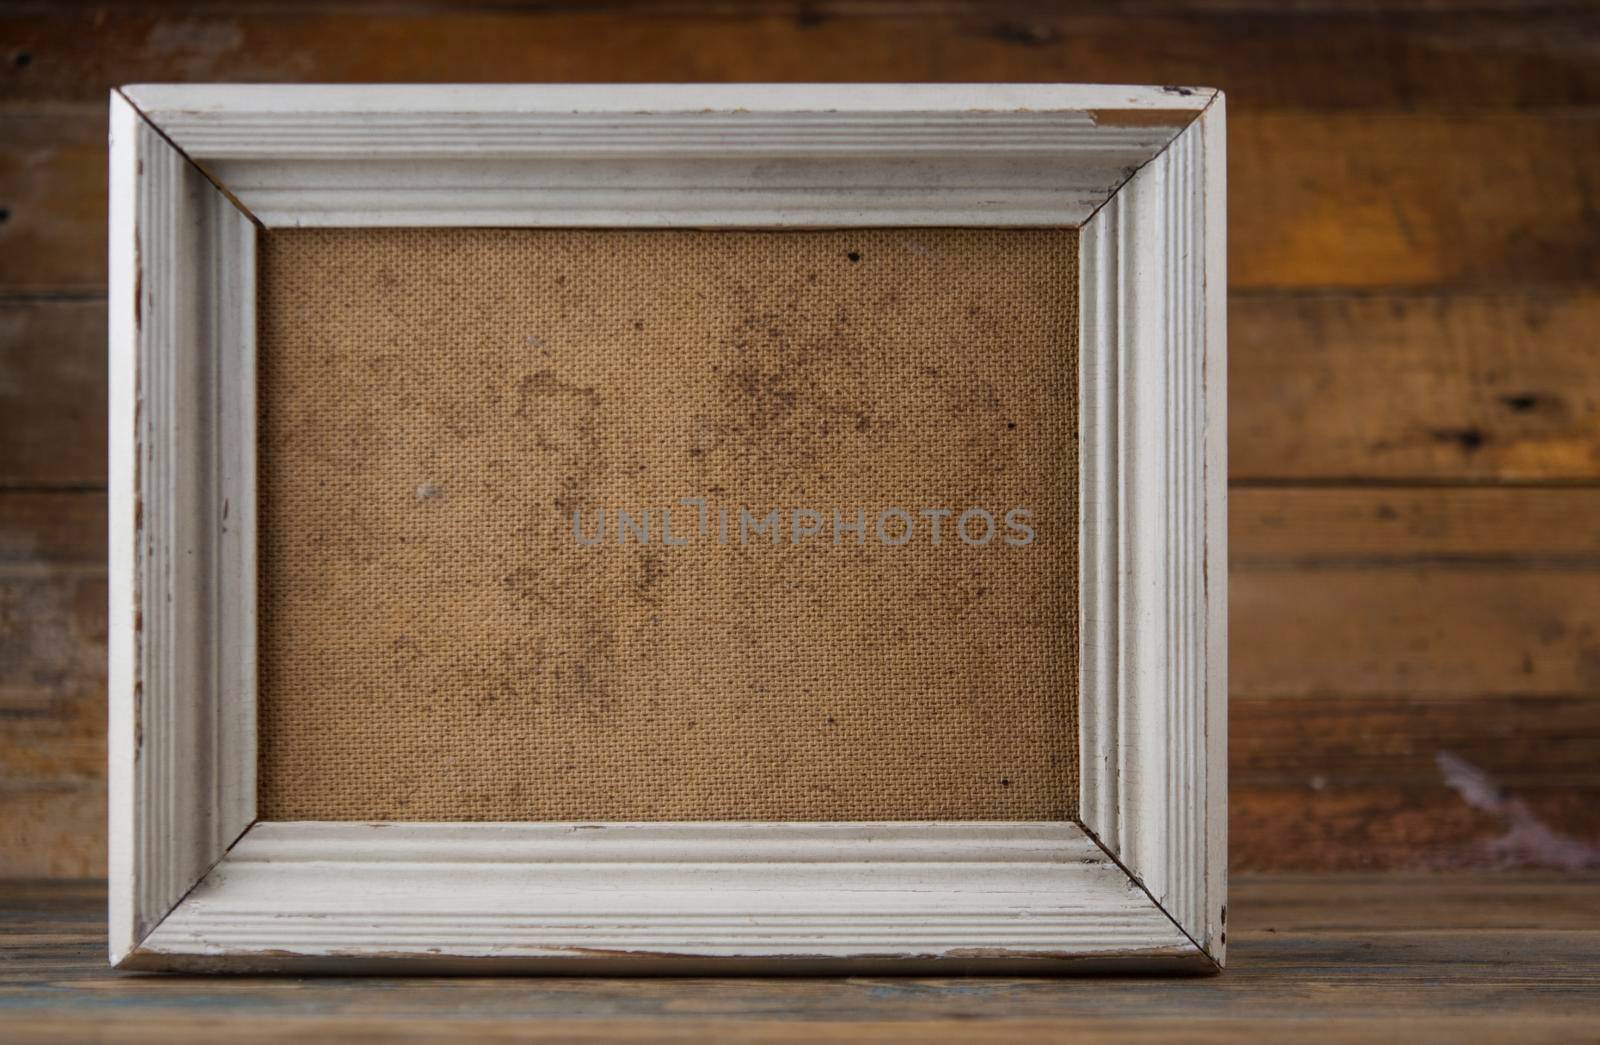 Blank old wooden frame on parquet floor